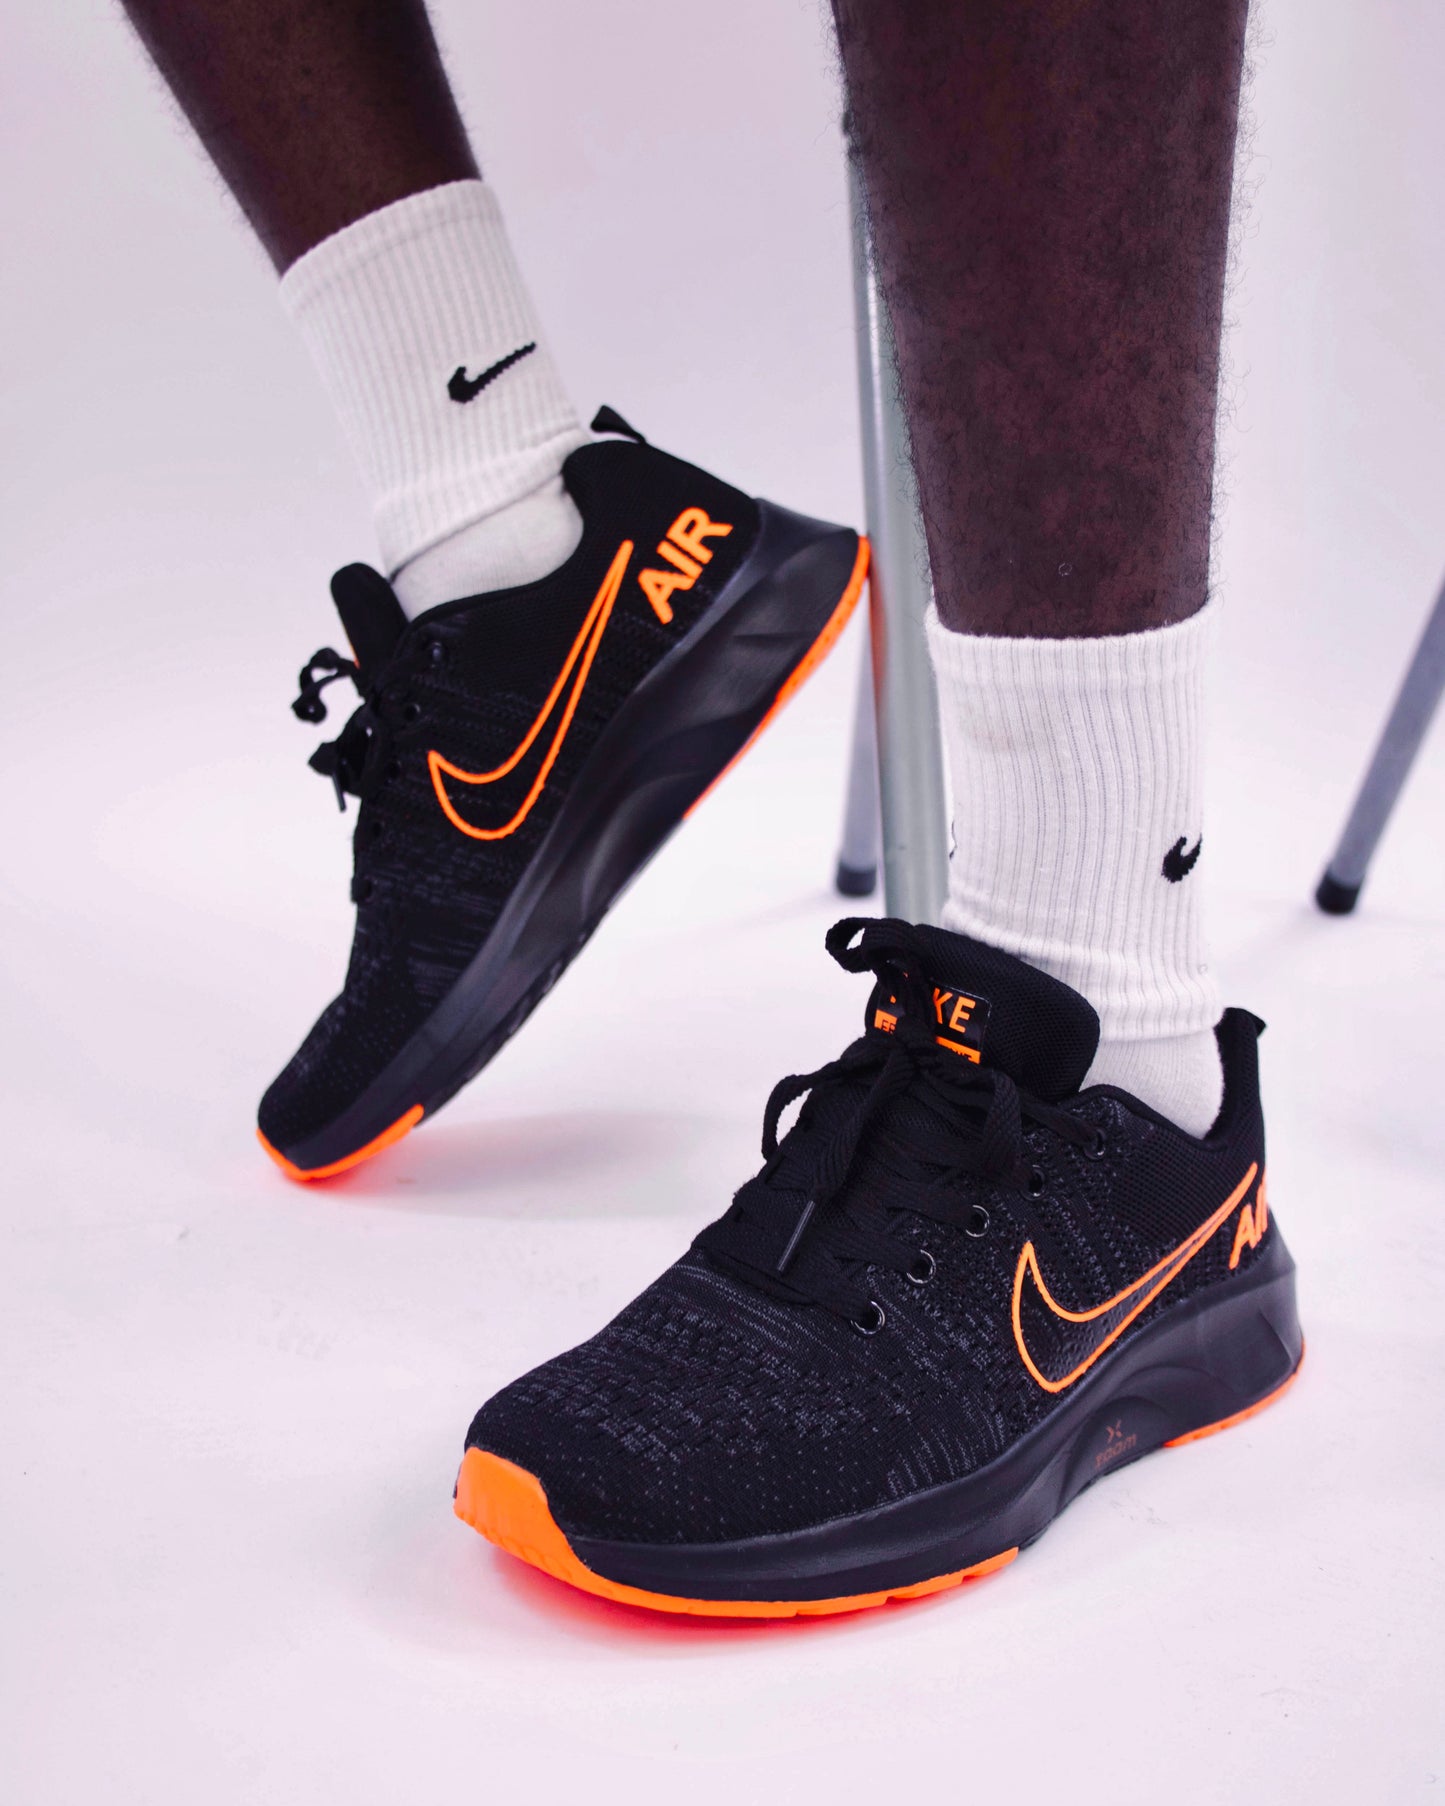 Nike air trainers in black and orange